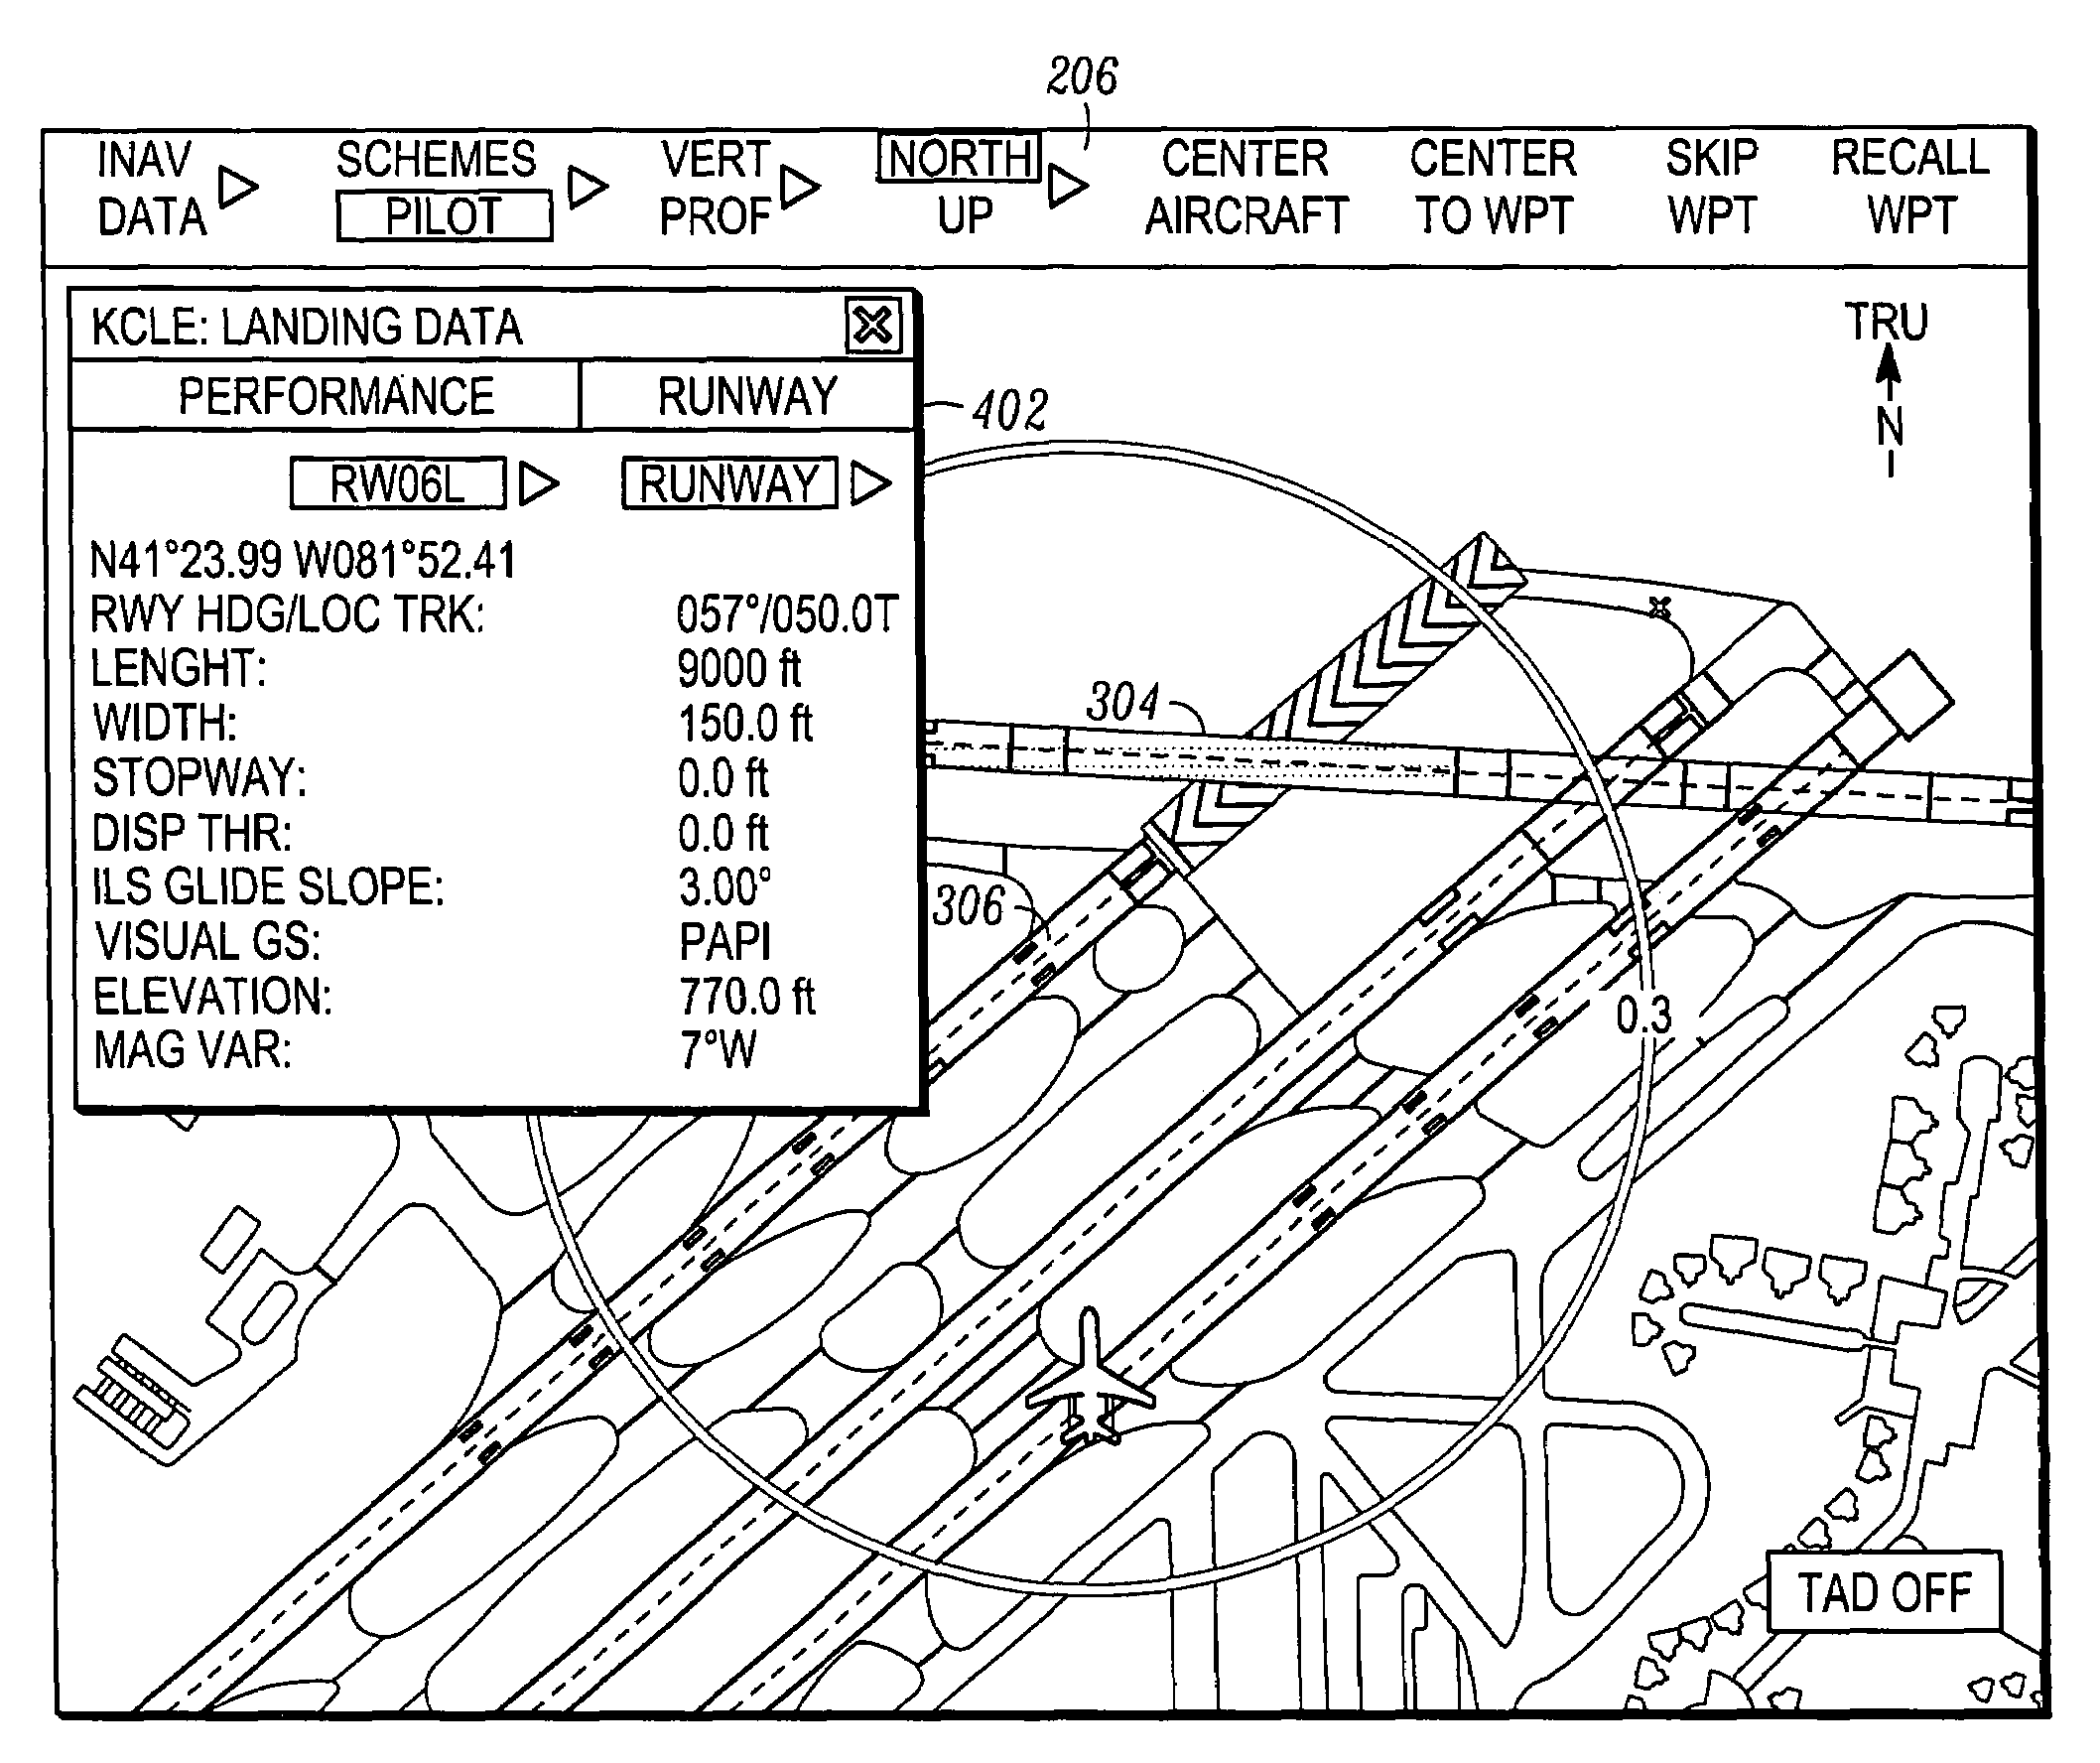 Method and apparatus to display landing performance data